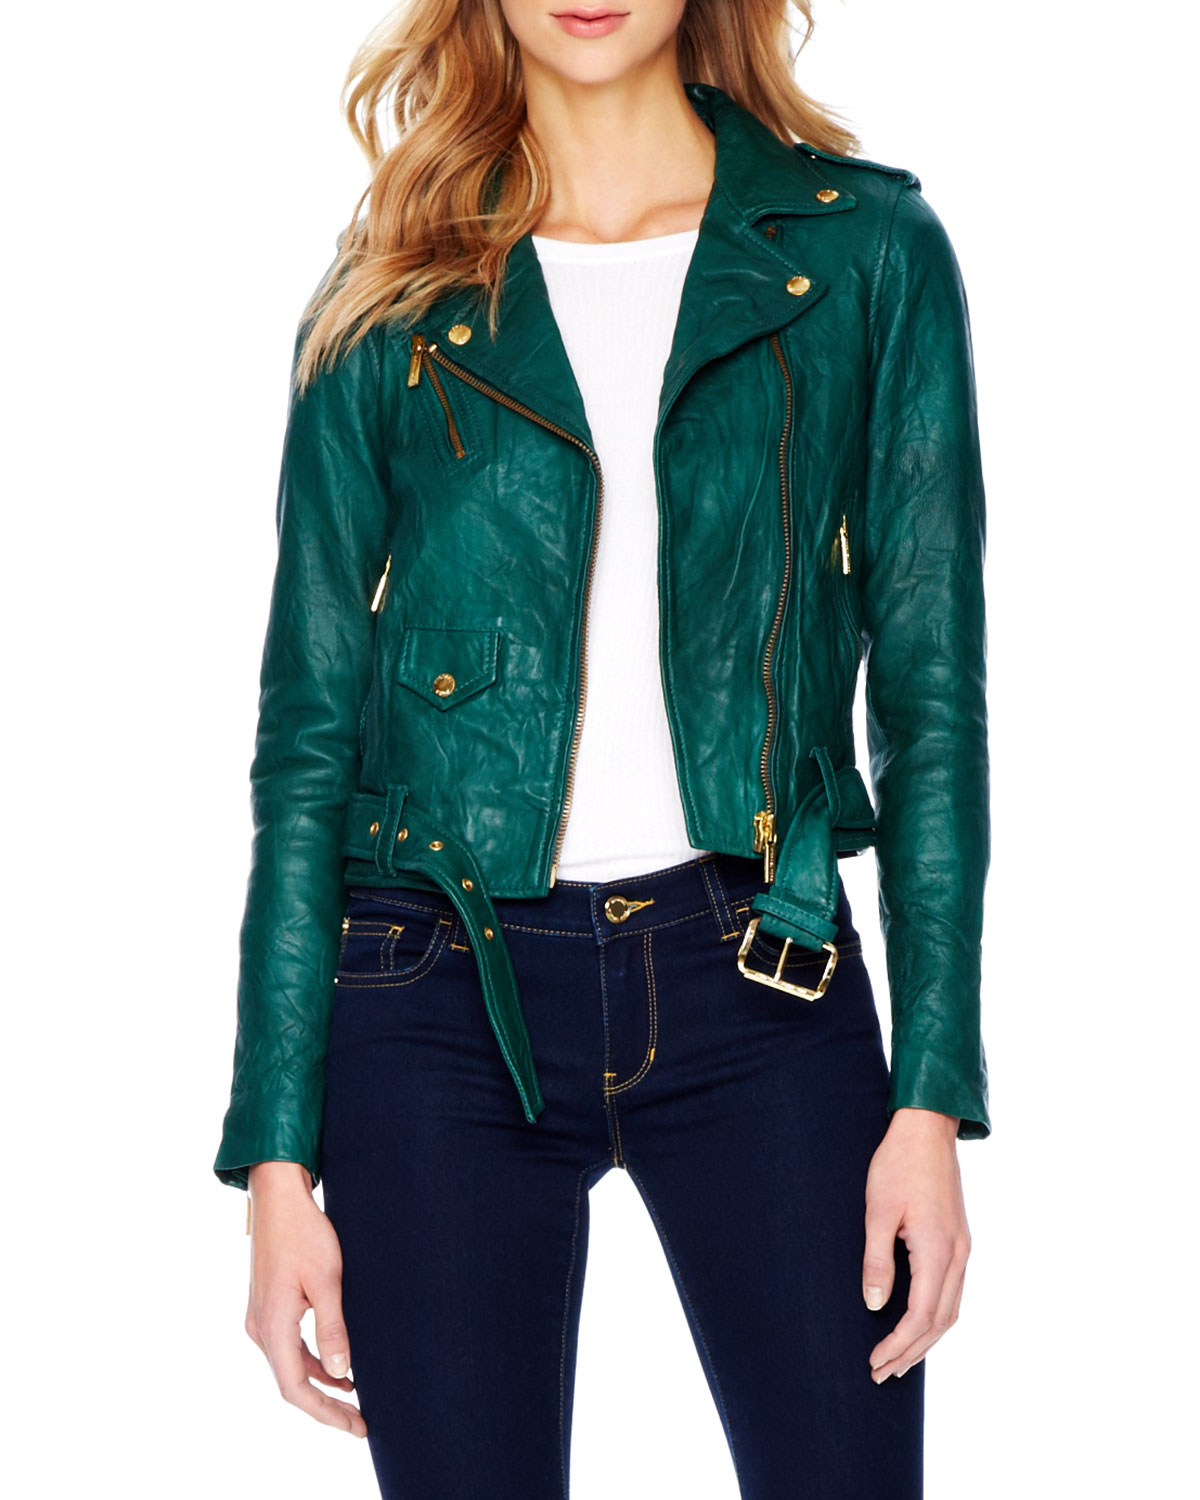 michael kors green leather jacket